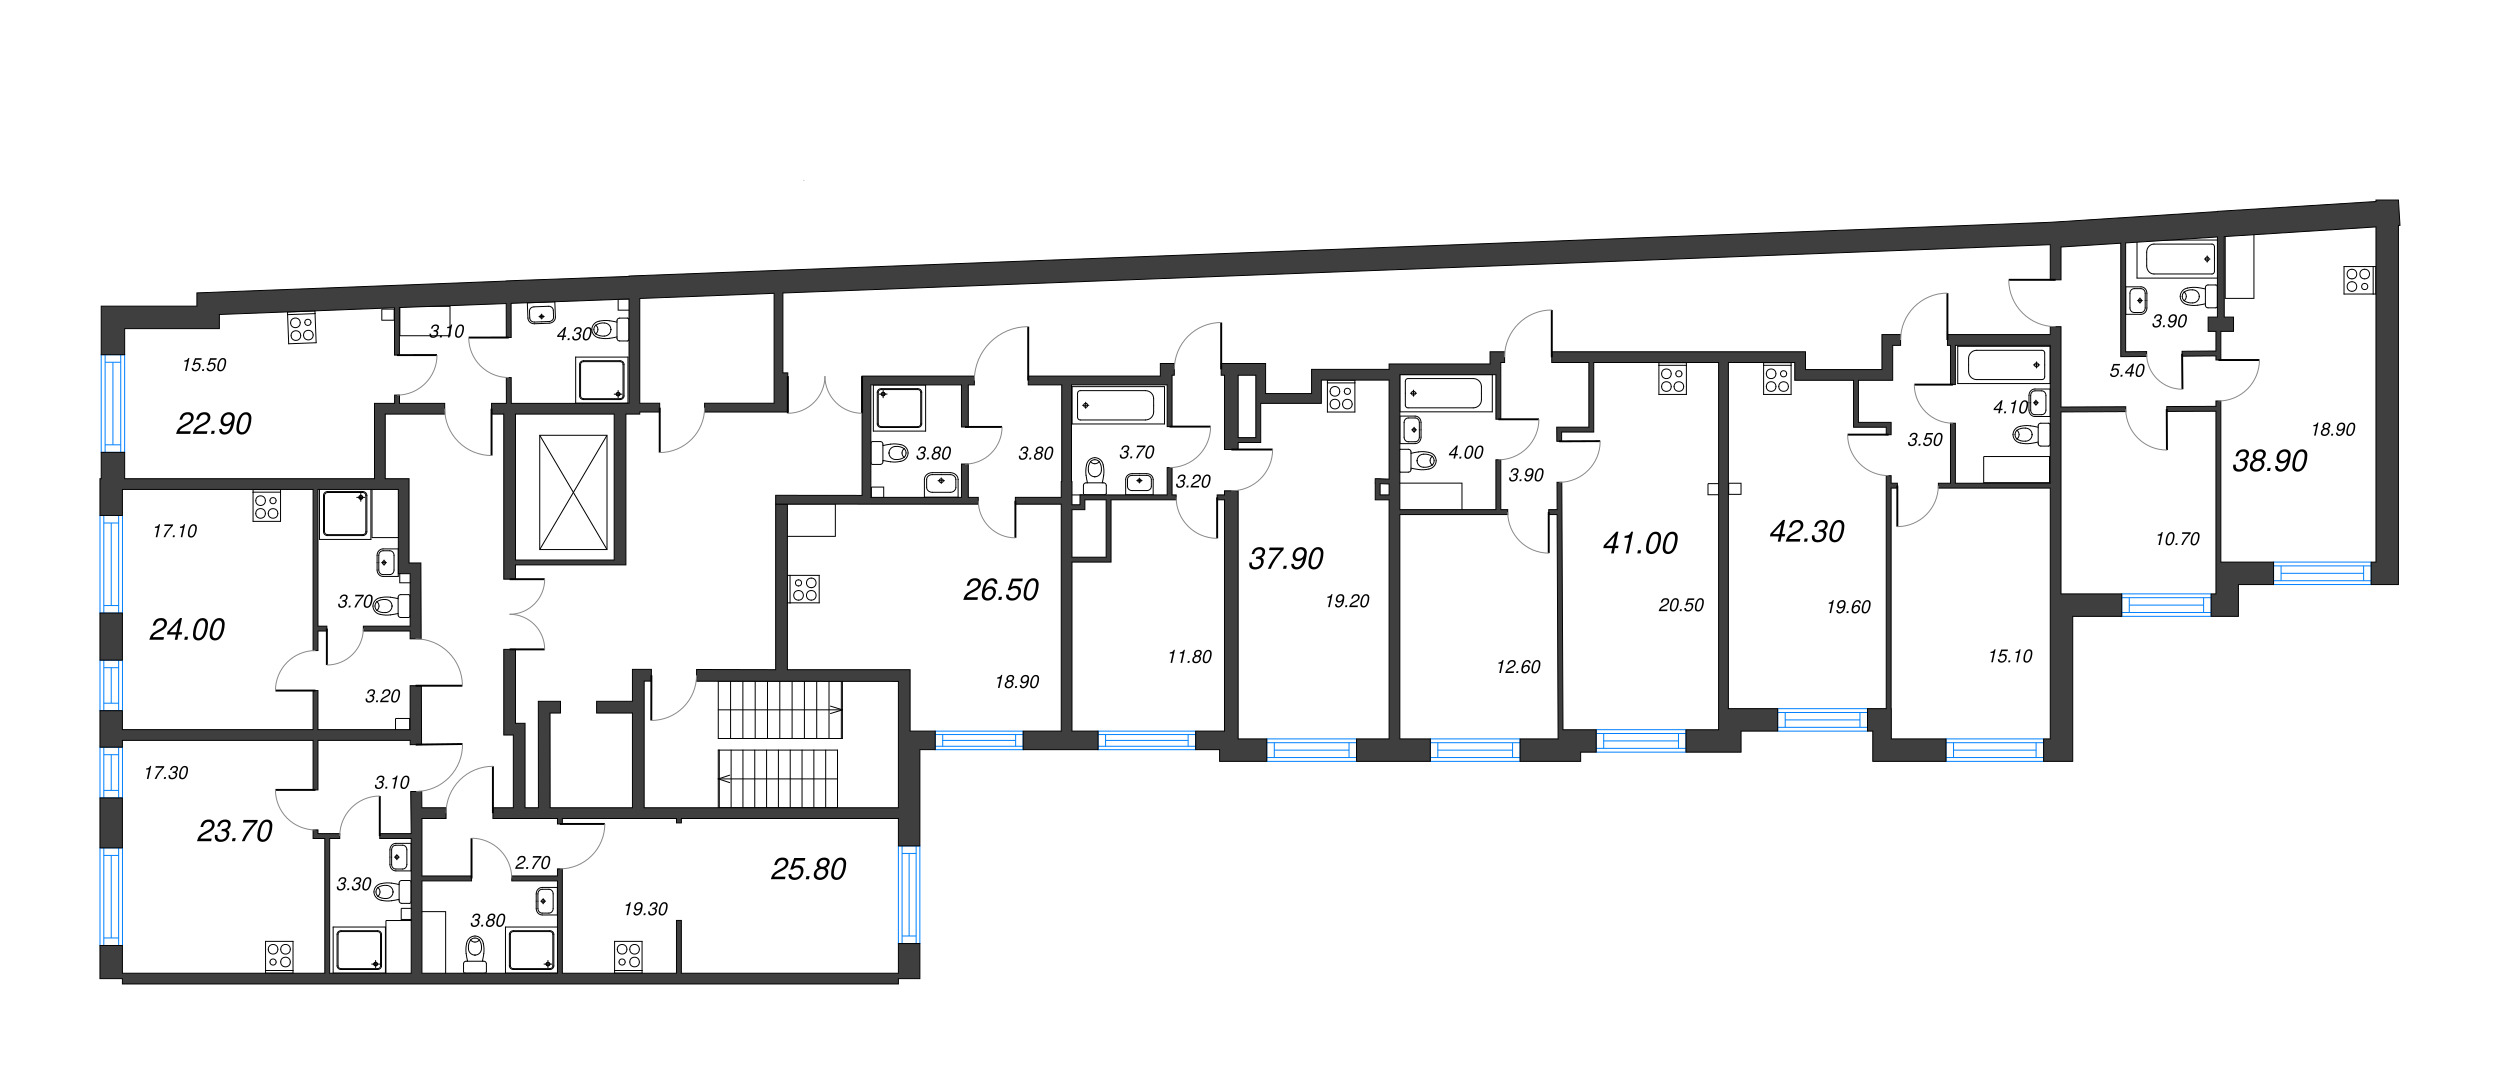 2-комнатная (Евро) квартира, 37.9 м² - планировка этажа